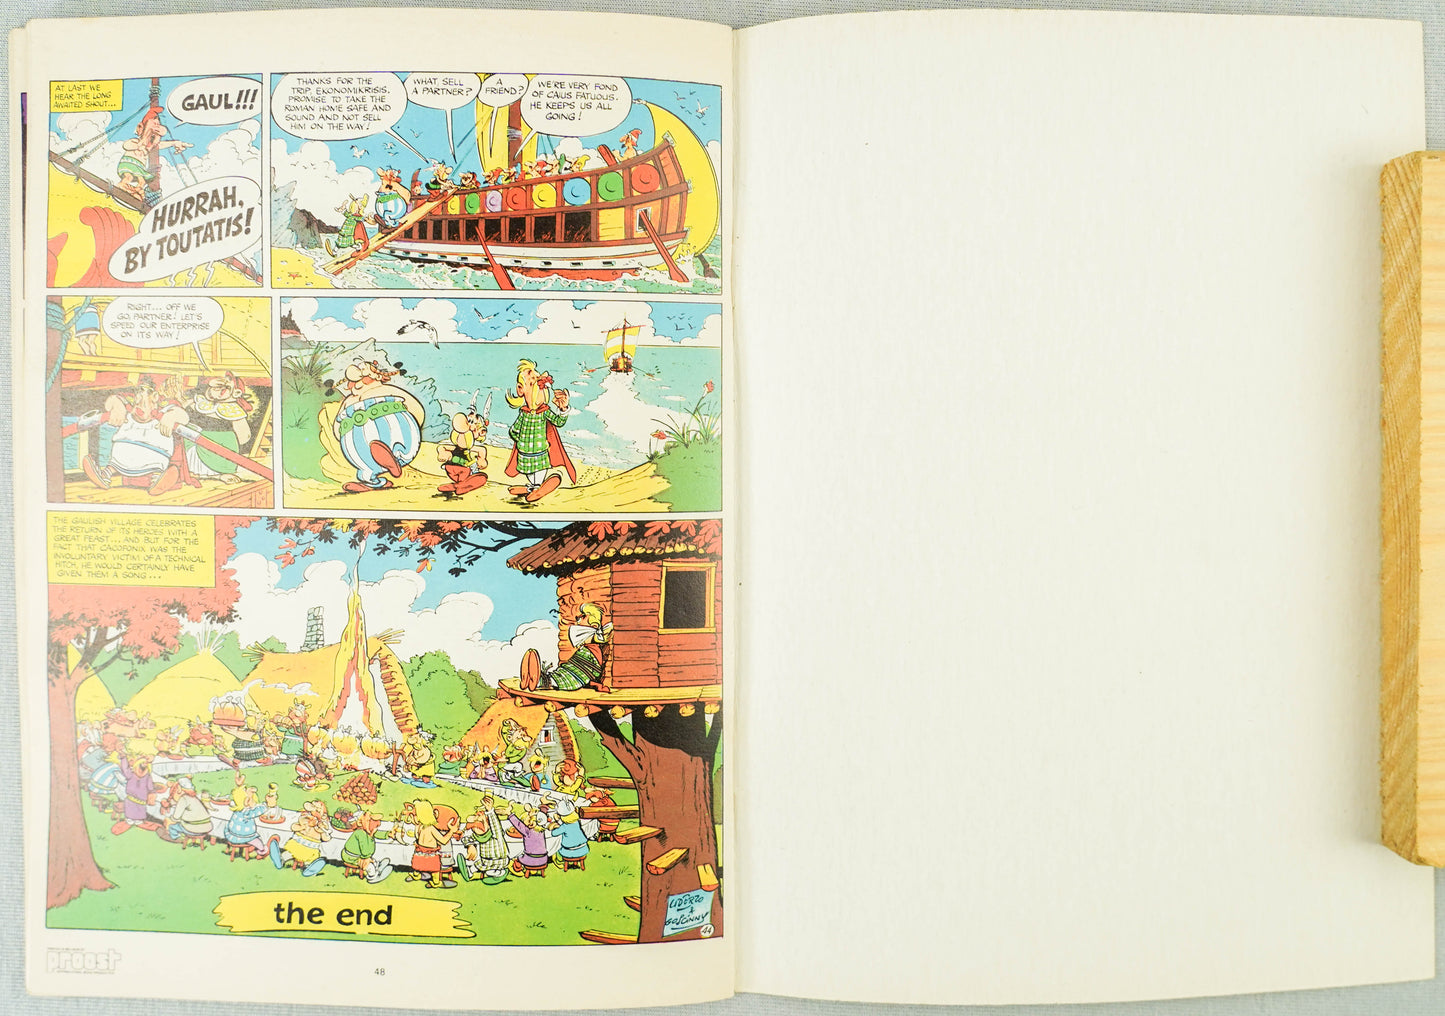 Asterix The Gladiator Vintage Mini A5 Asterix Book UK Paperback Edition Uderzo